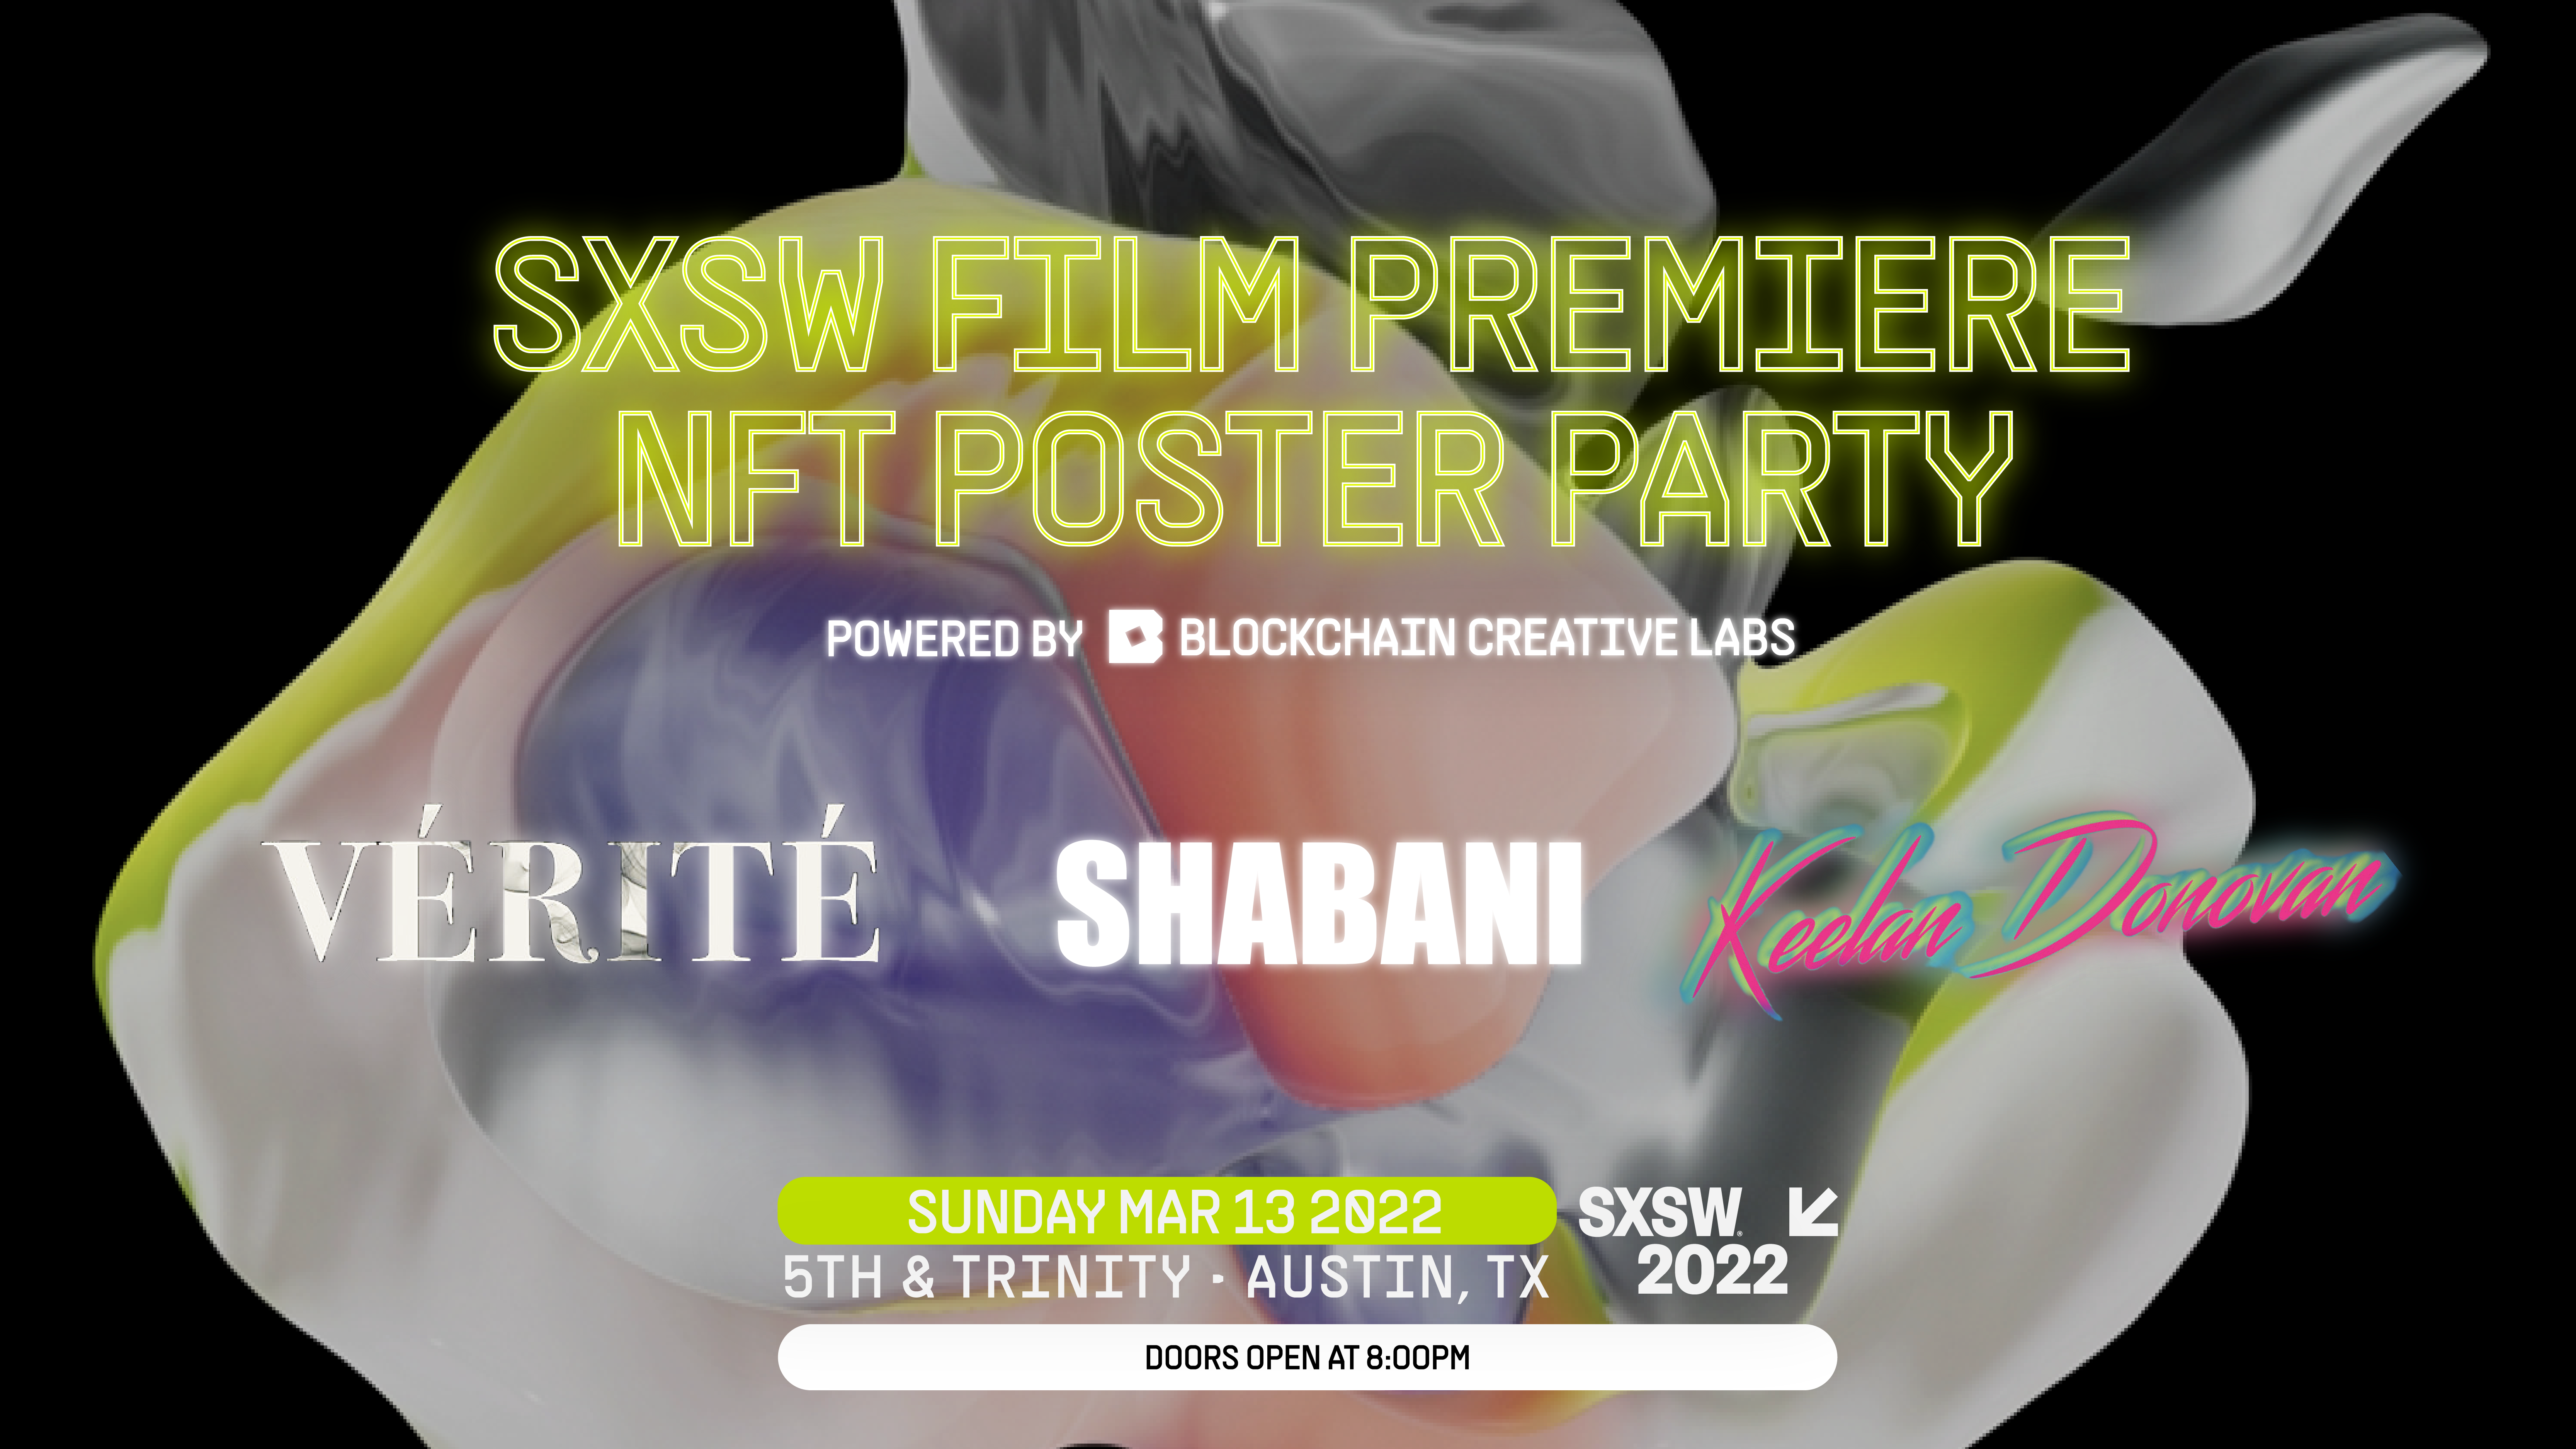 SXSW Film Poster Premiere NFT Party Featuring Verite